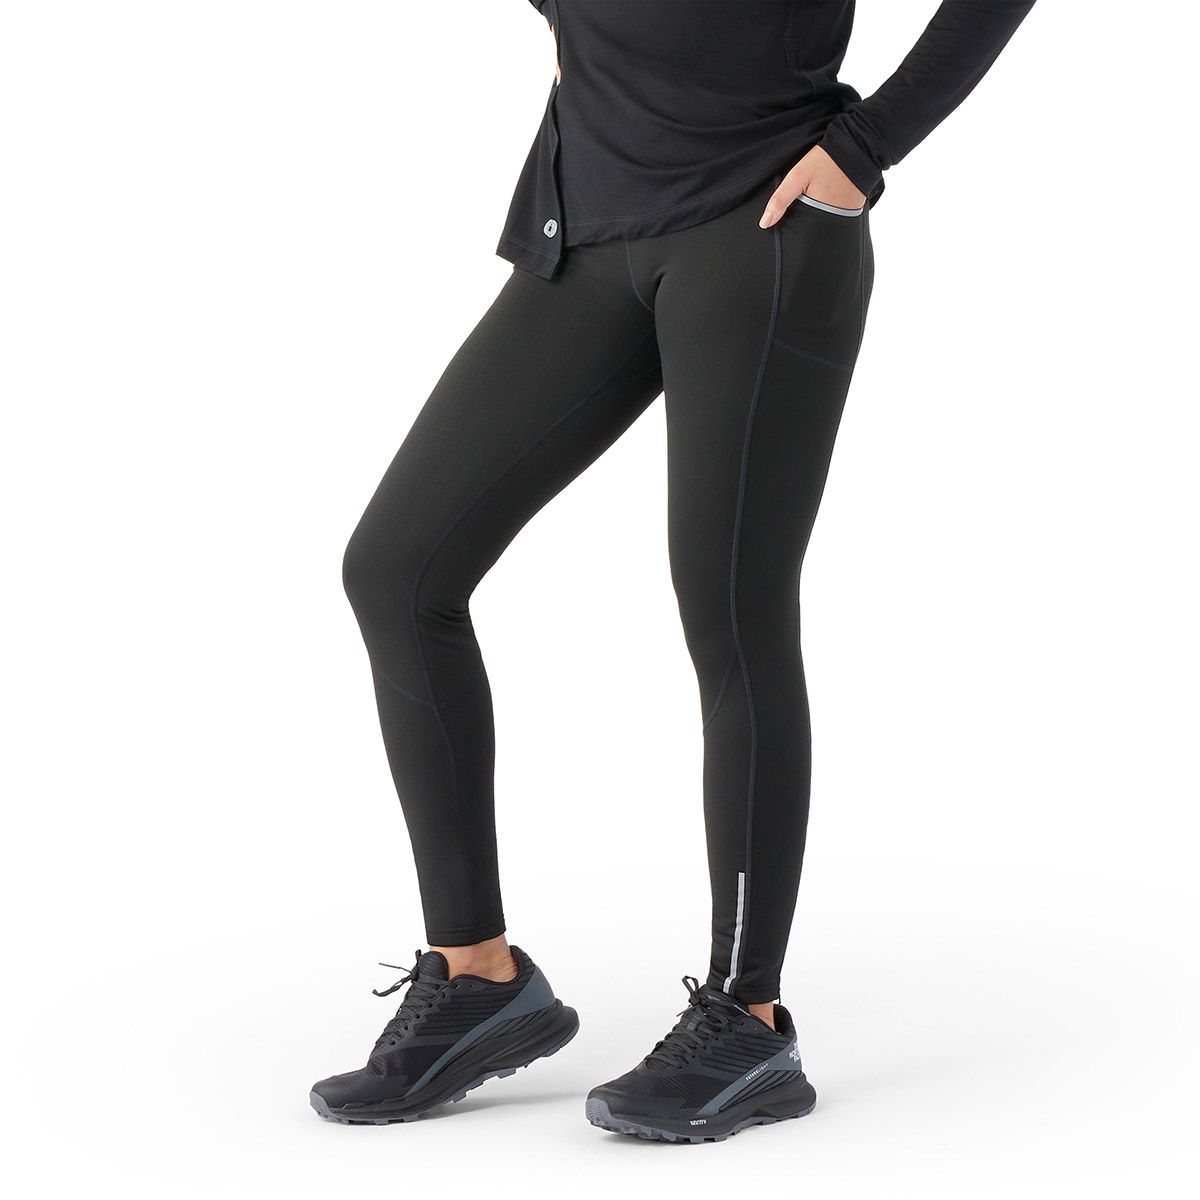 Smartwool Active Legging - Women's, Black, XS at  Women's Clothing  store